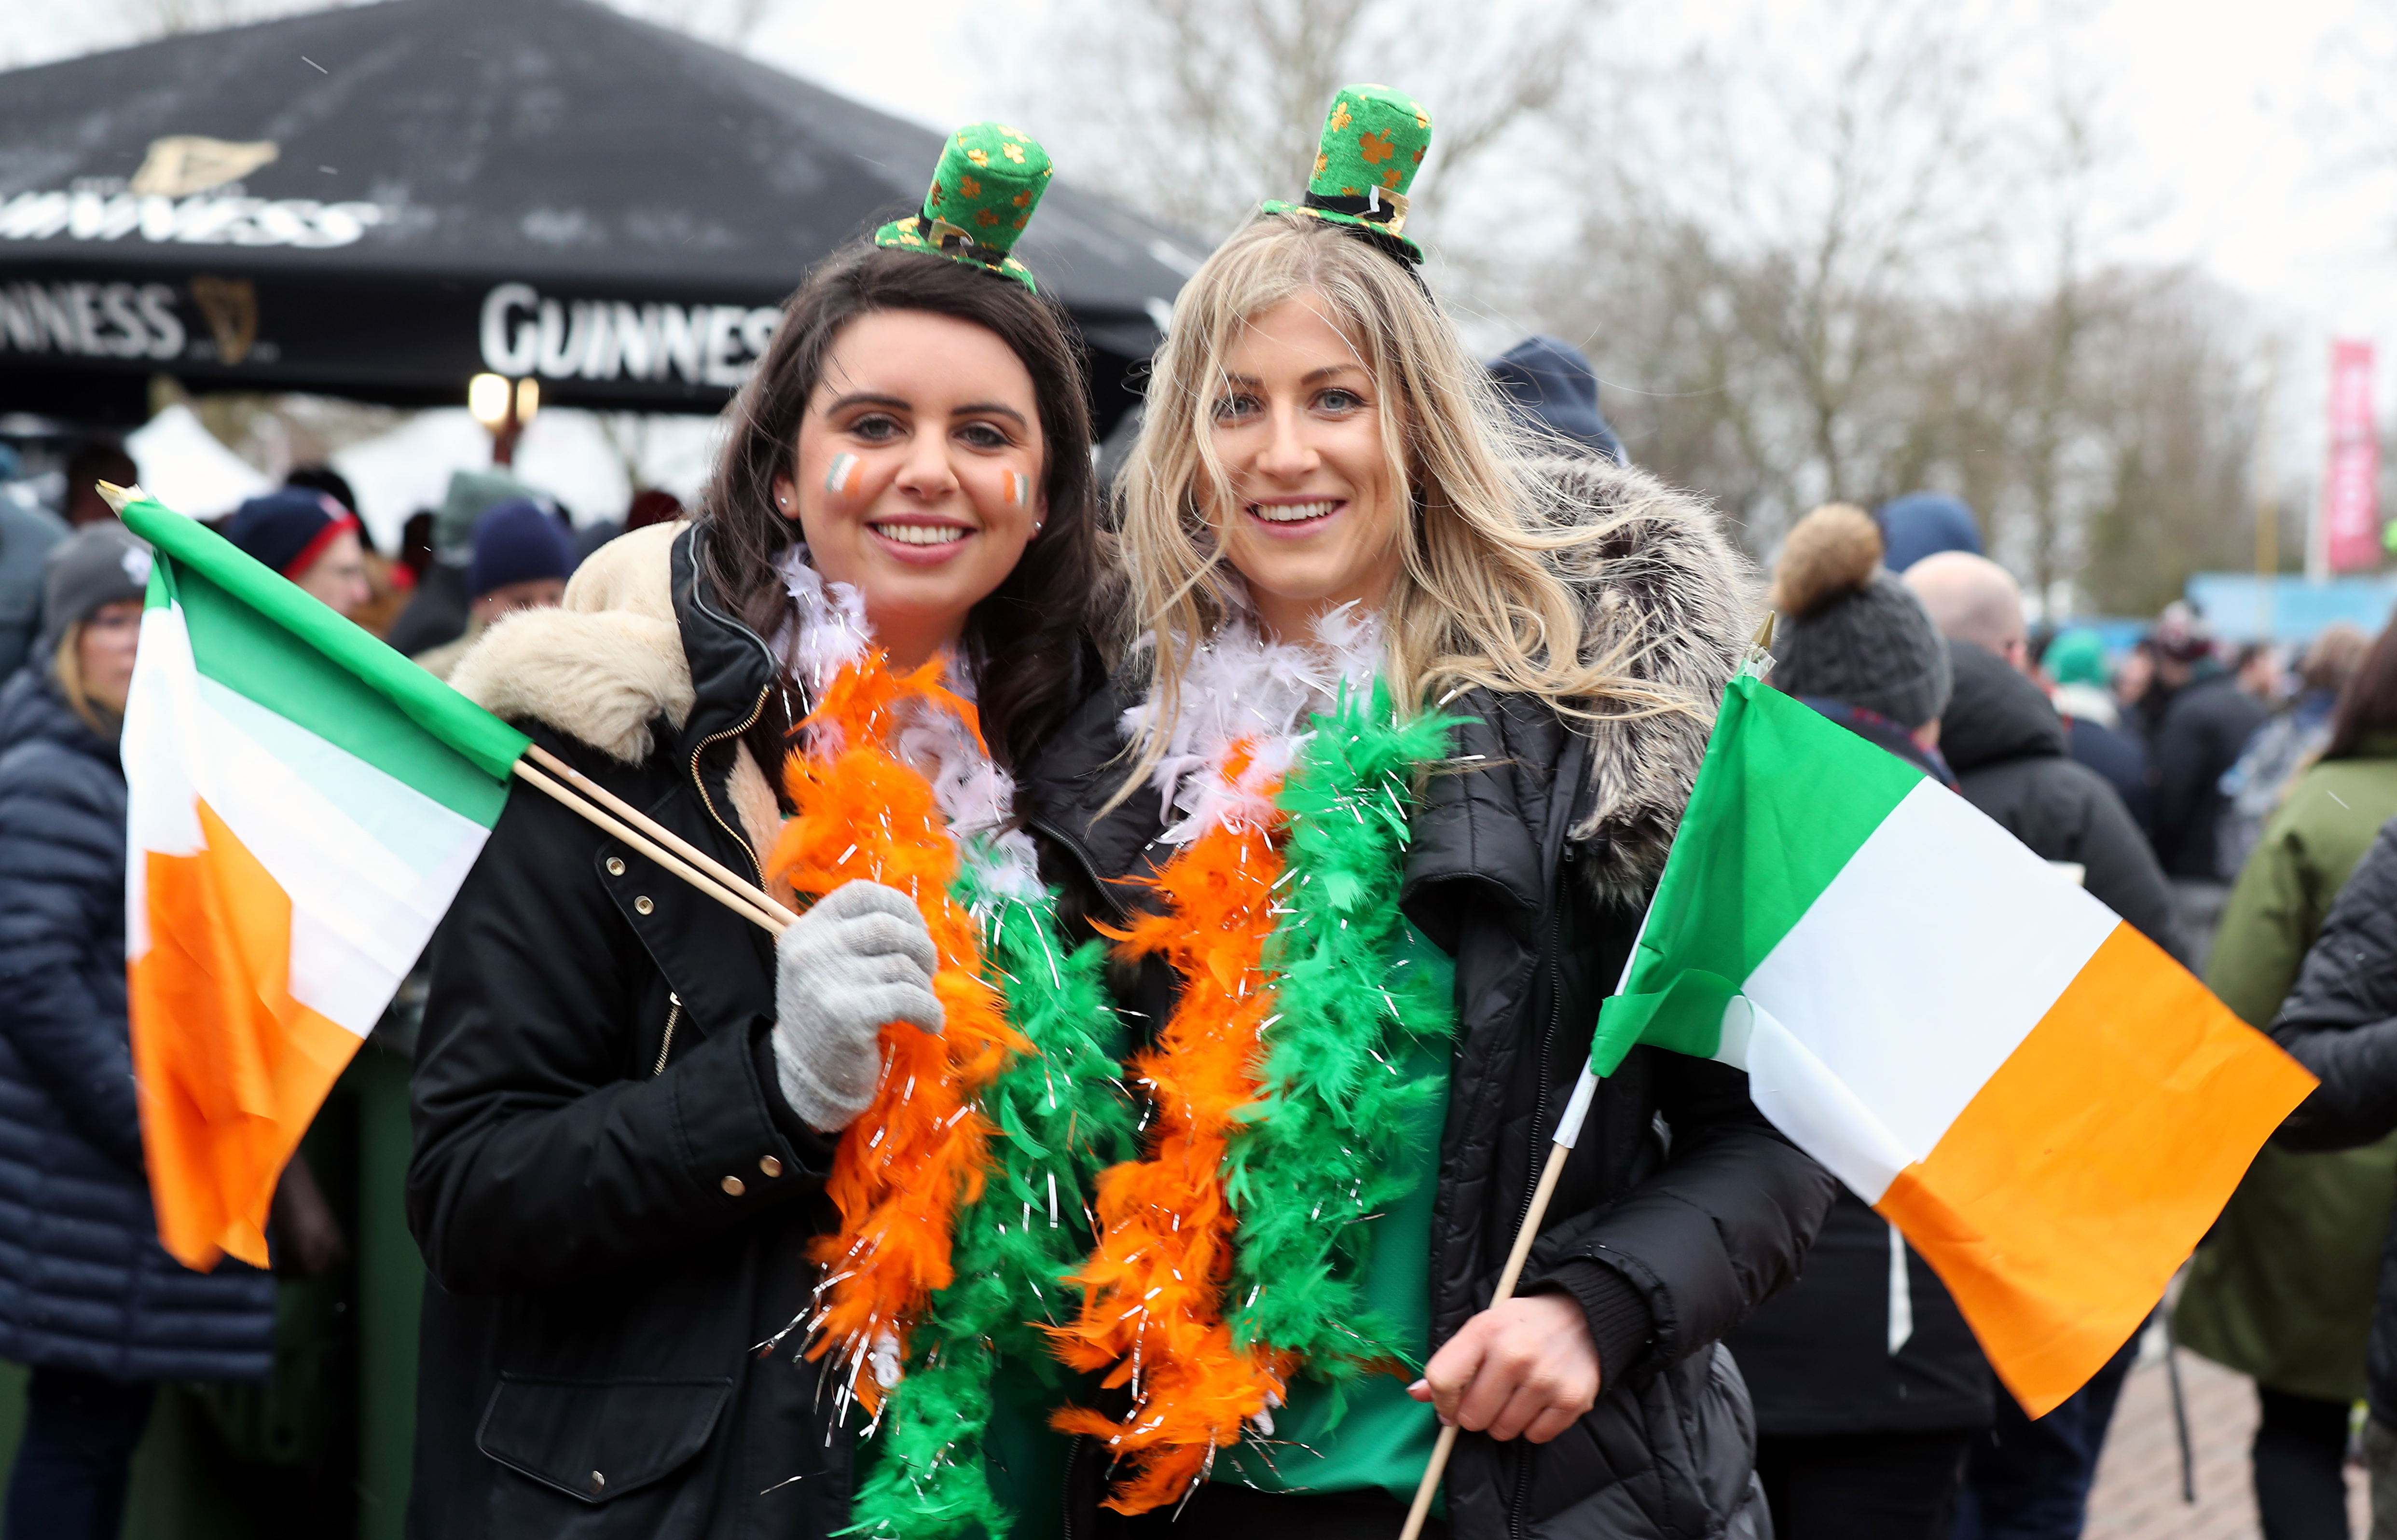 Ireland fans prior to the NatWest 6 Nations match at Twickenham Stadium, London 